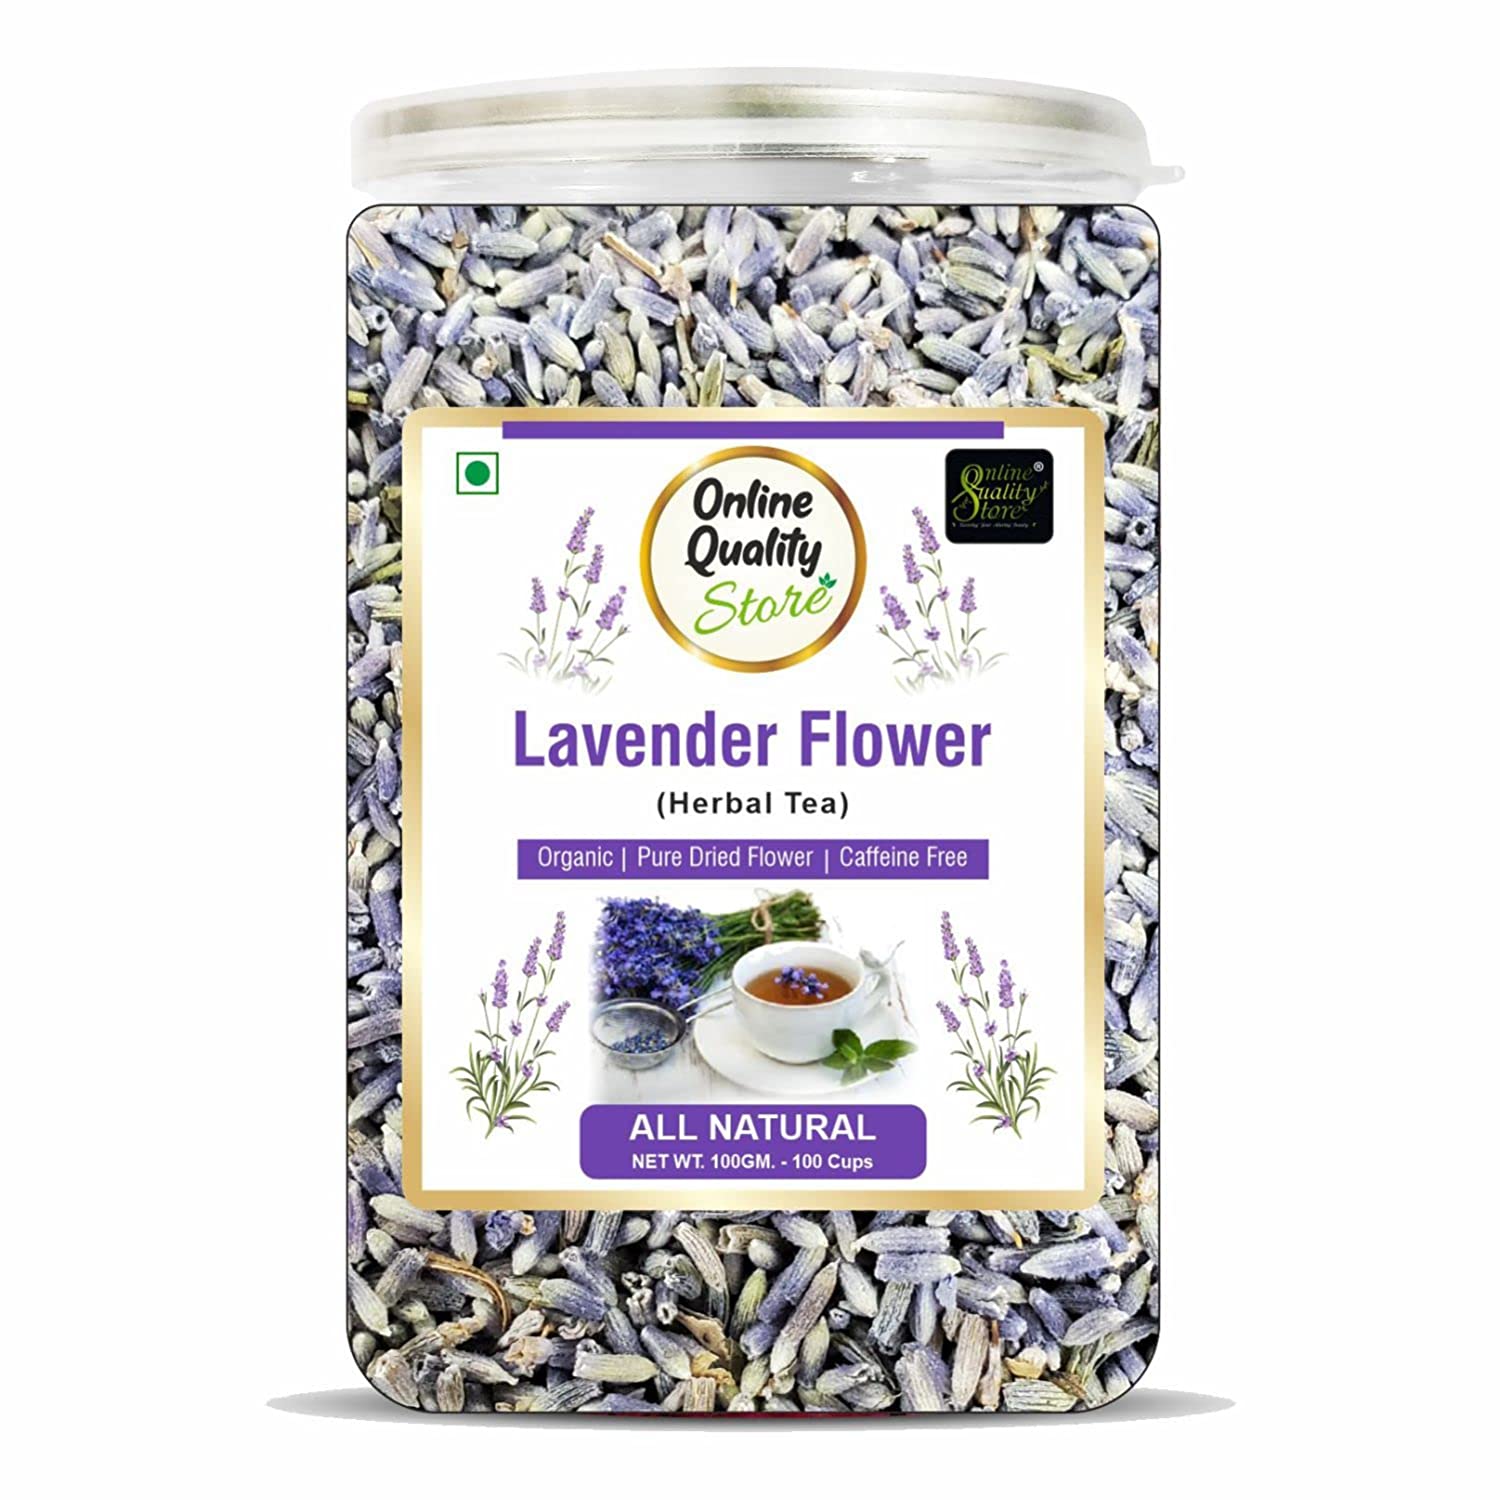 online quality store lavender flower tea-100g - online quality